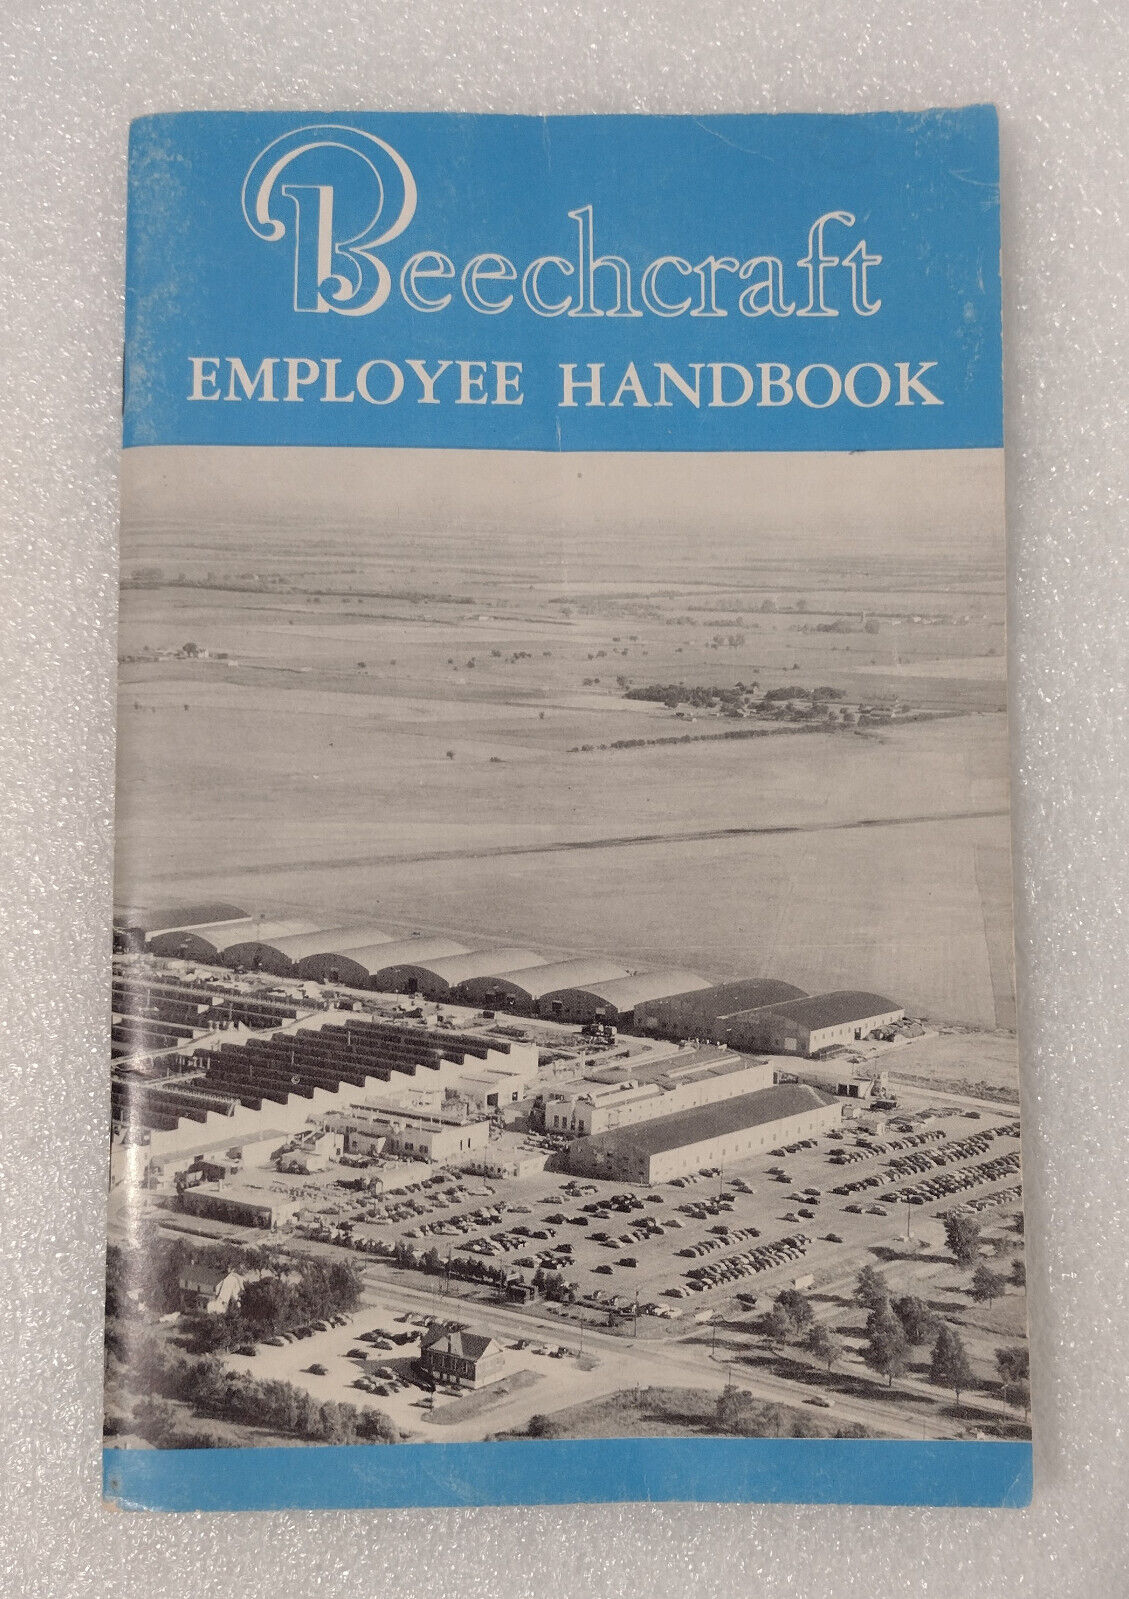 Beechcraft employee handbook. I believe this to be from the 1950\'s.